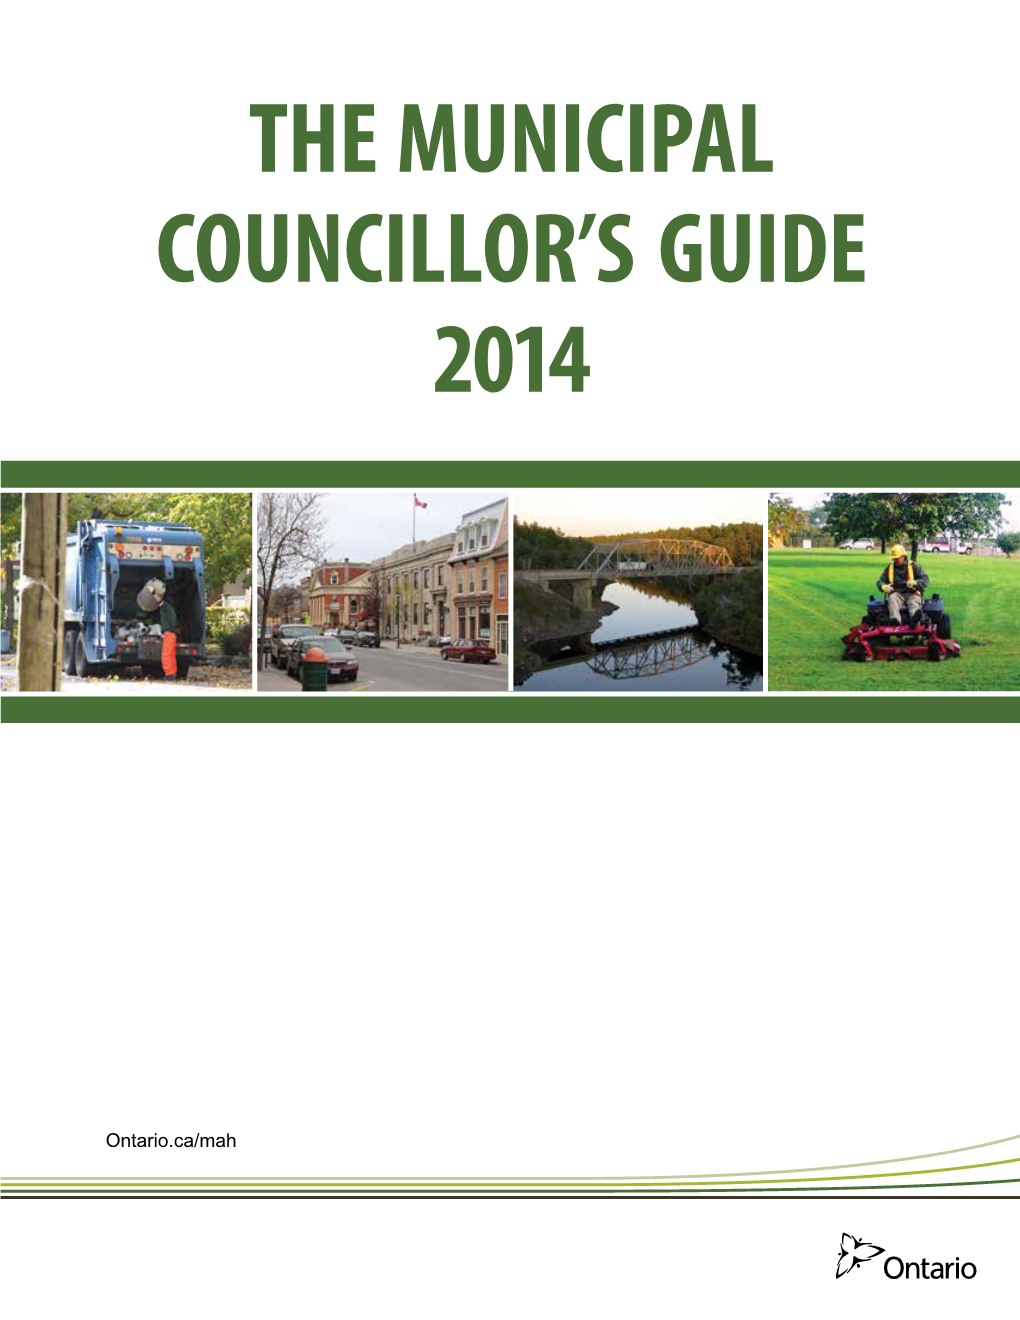 The Municipal Councillor's Guide 2014